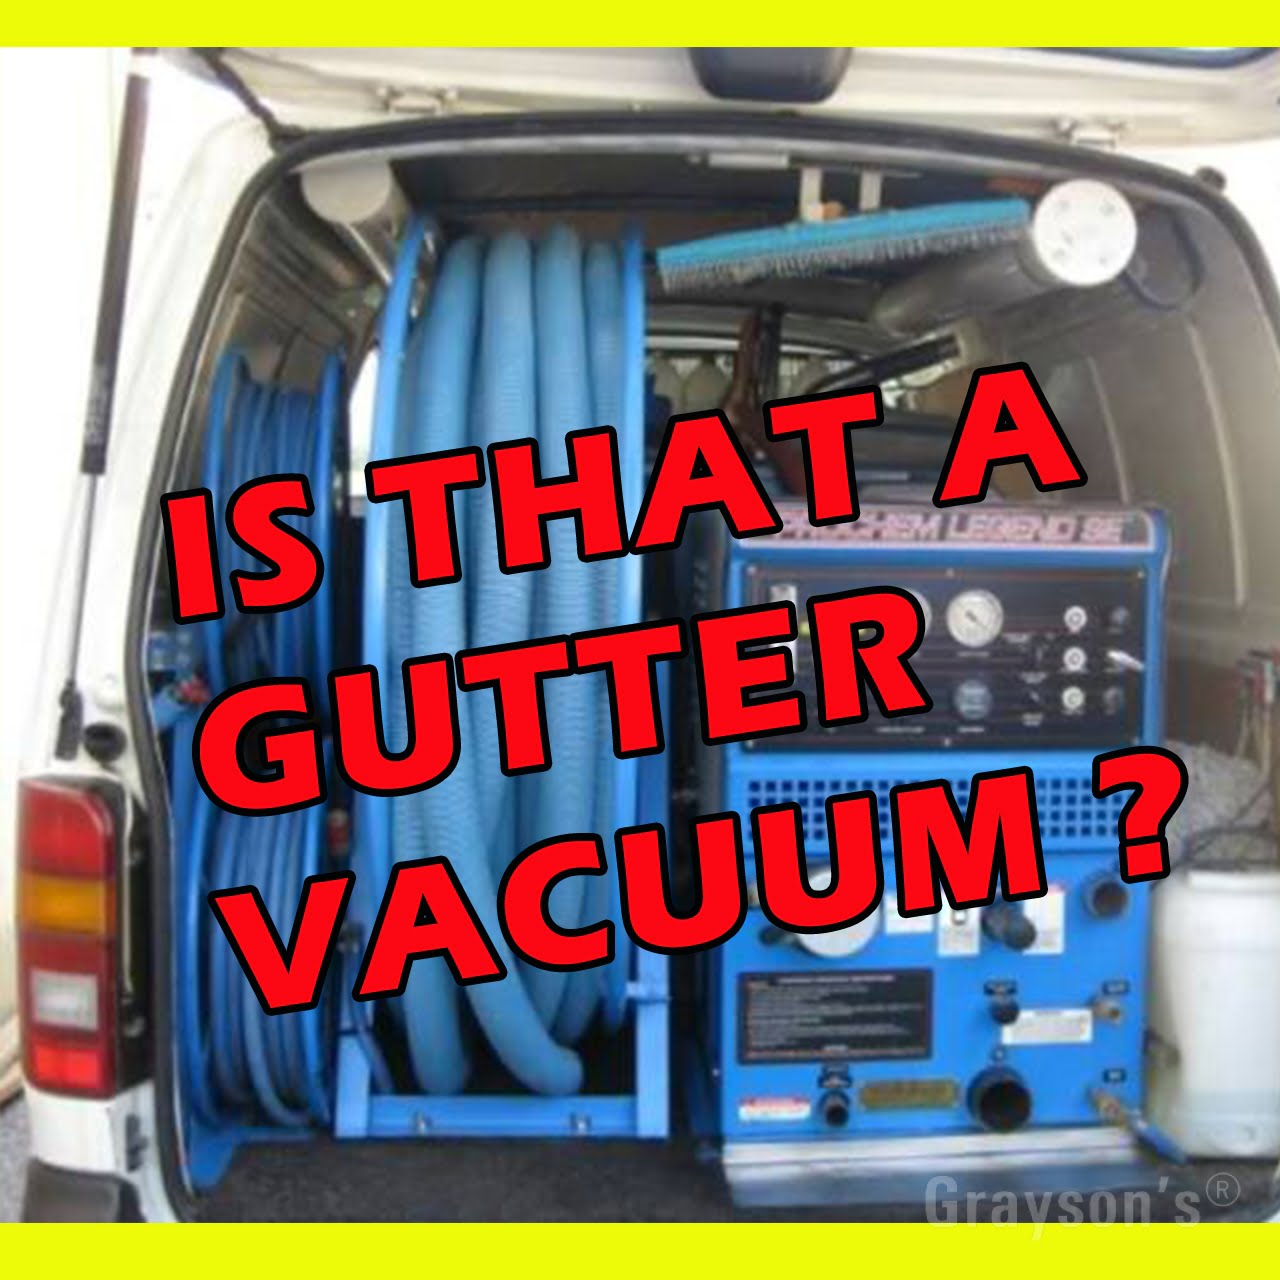 Gutter vacuuming